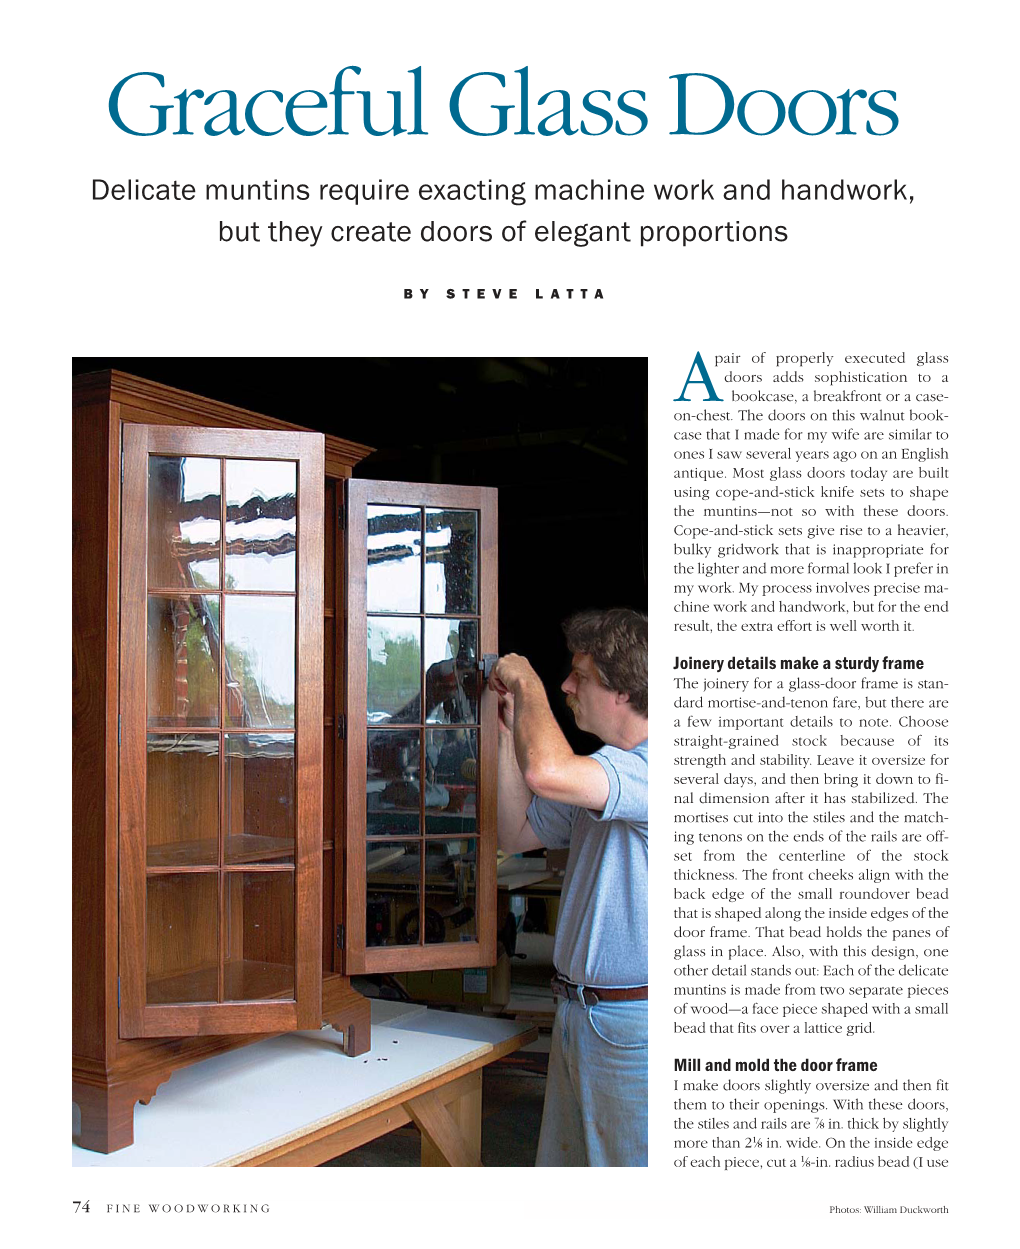 Graceful Glass Doors Delicate Muntins Require Exacting Machine Work and Handwork, but They Create Doors of Elegant Proportions